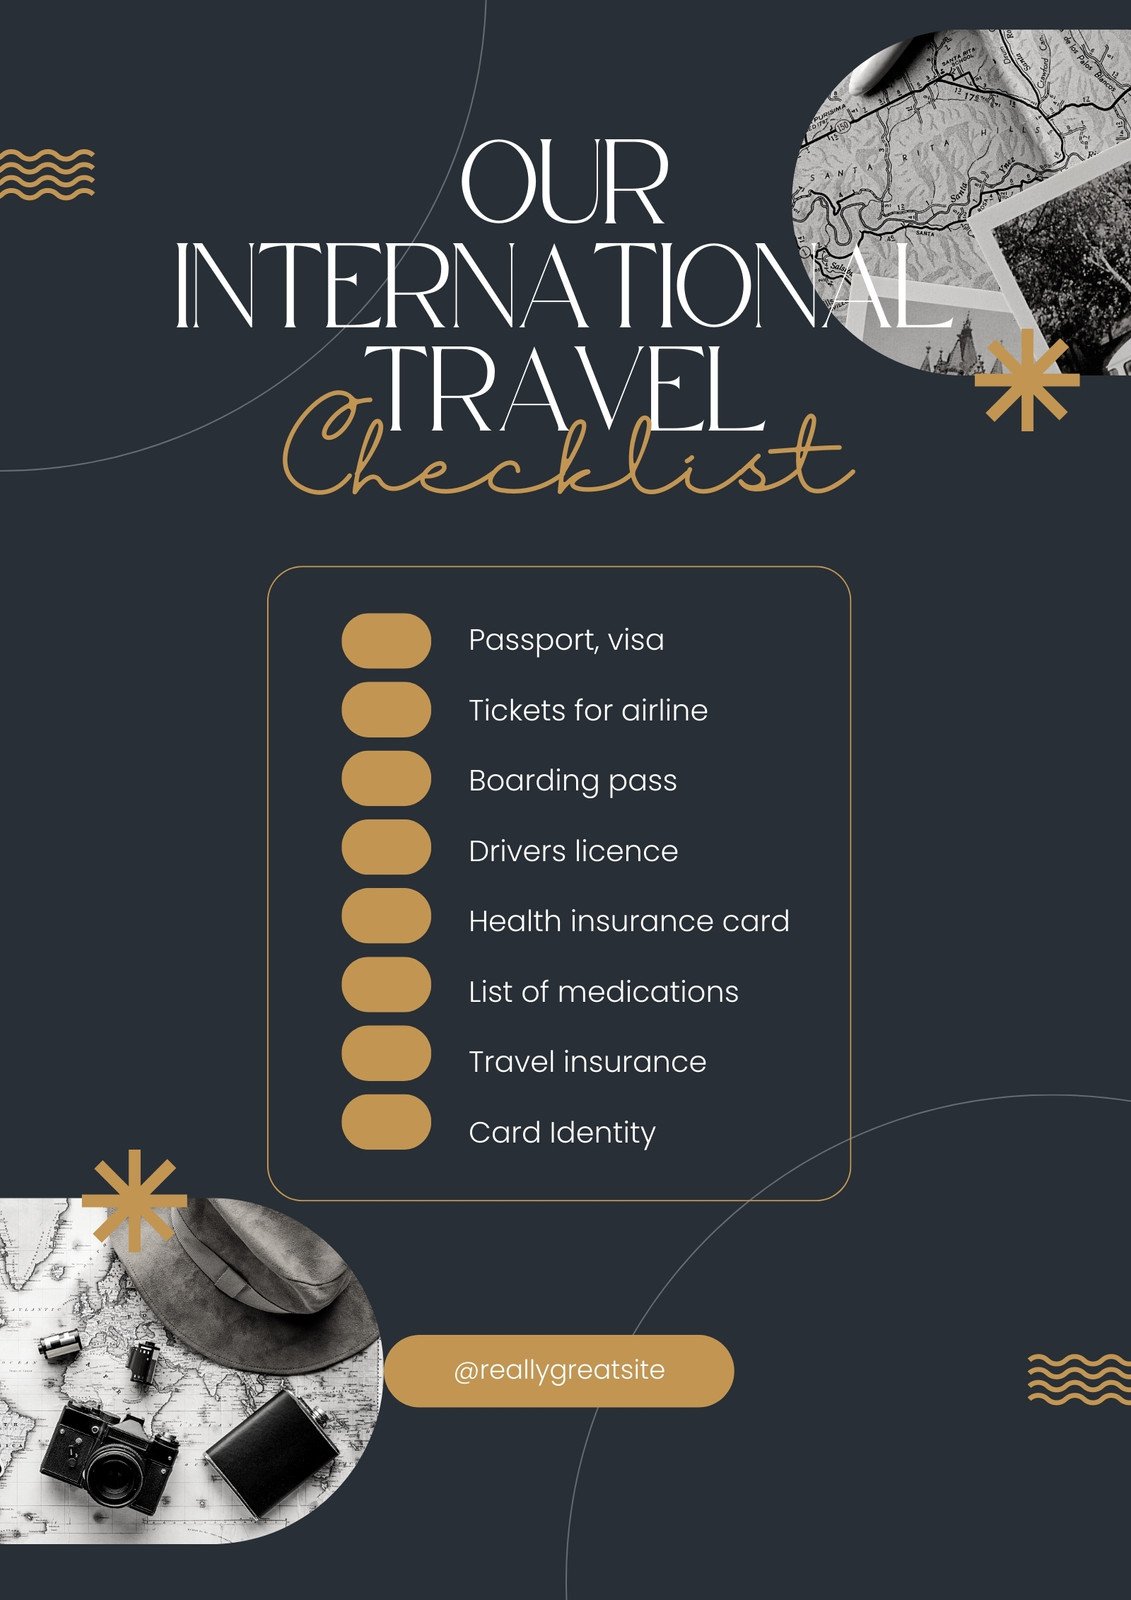 Customize 68+ Travel Checklist Templates Online - Canva